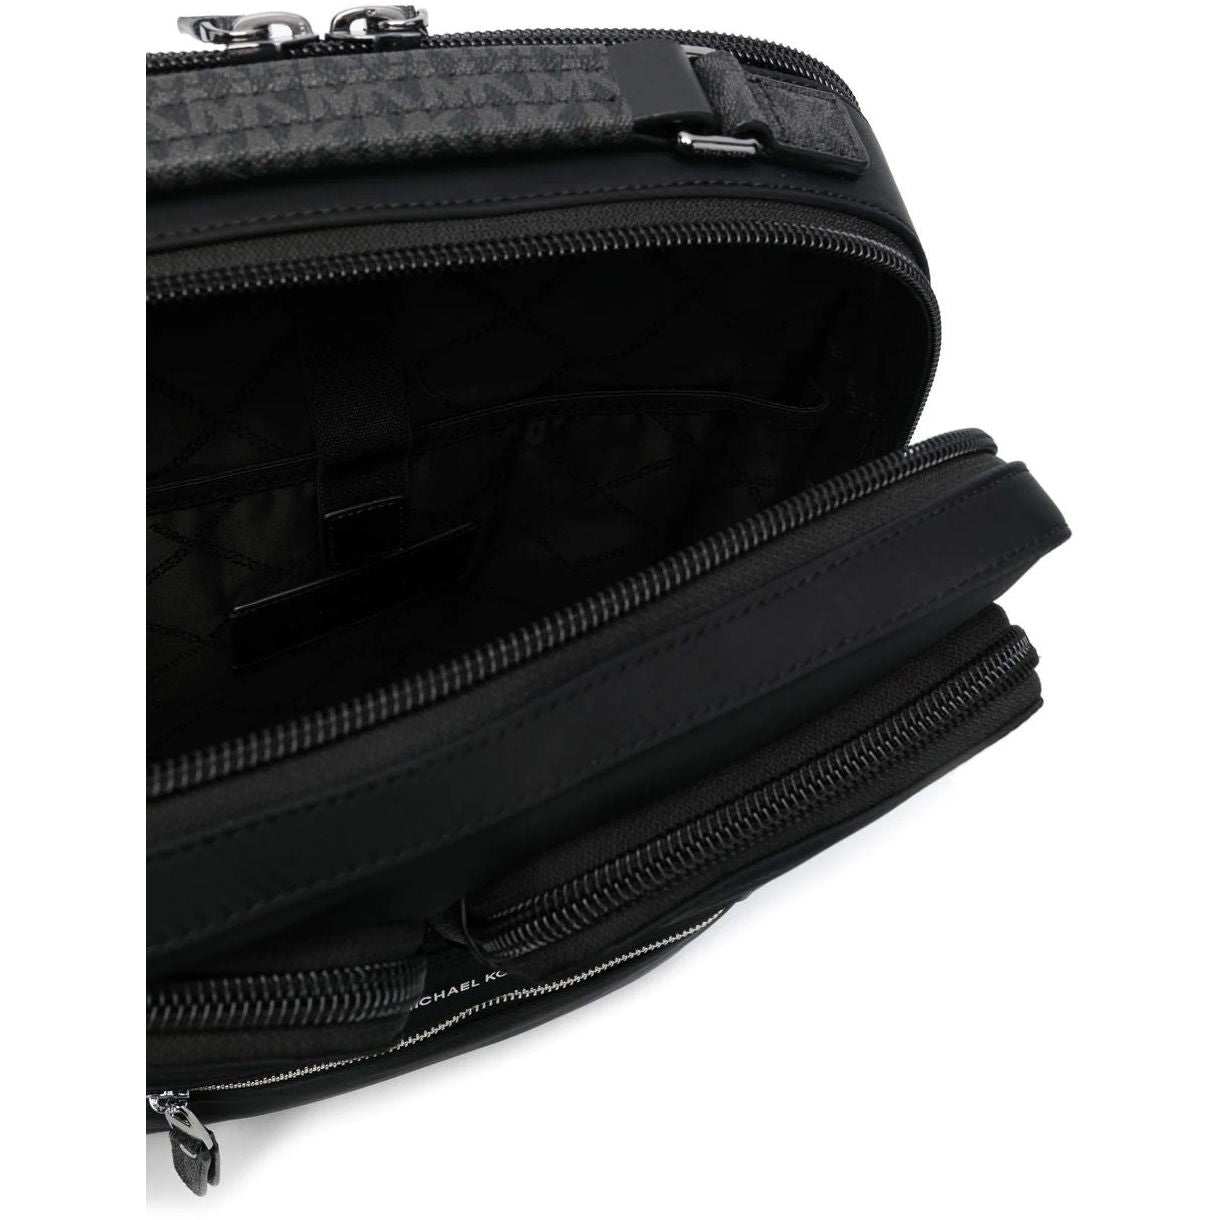 MICHAEL KORS vyriška juoda kuprinė Business backpack multi pockets